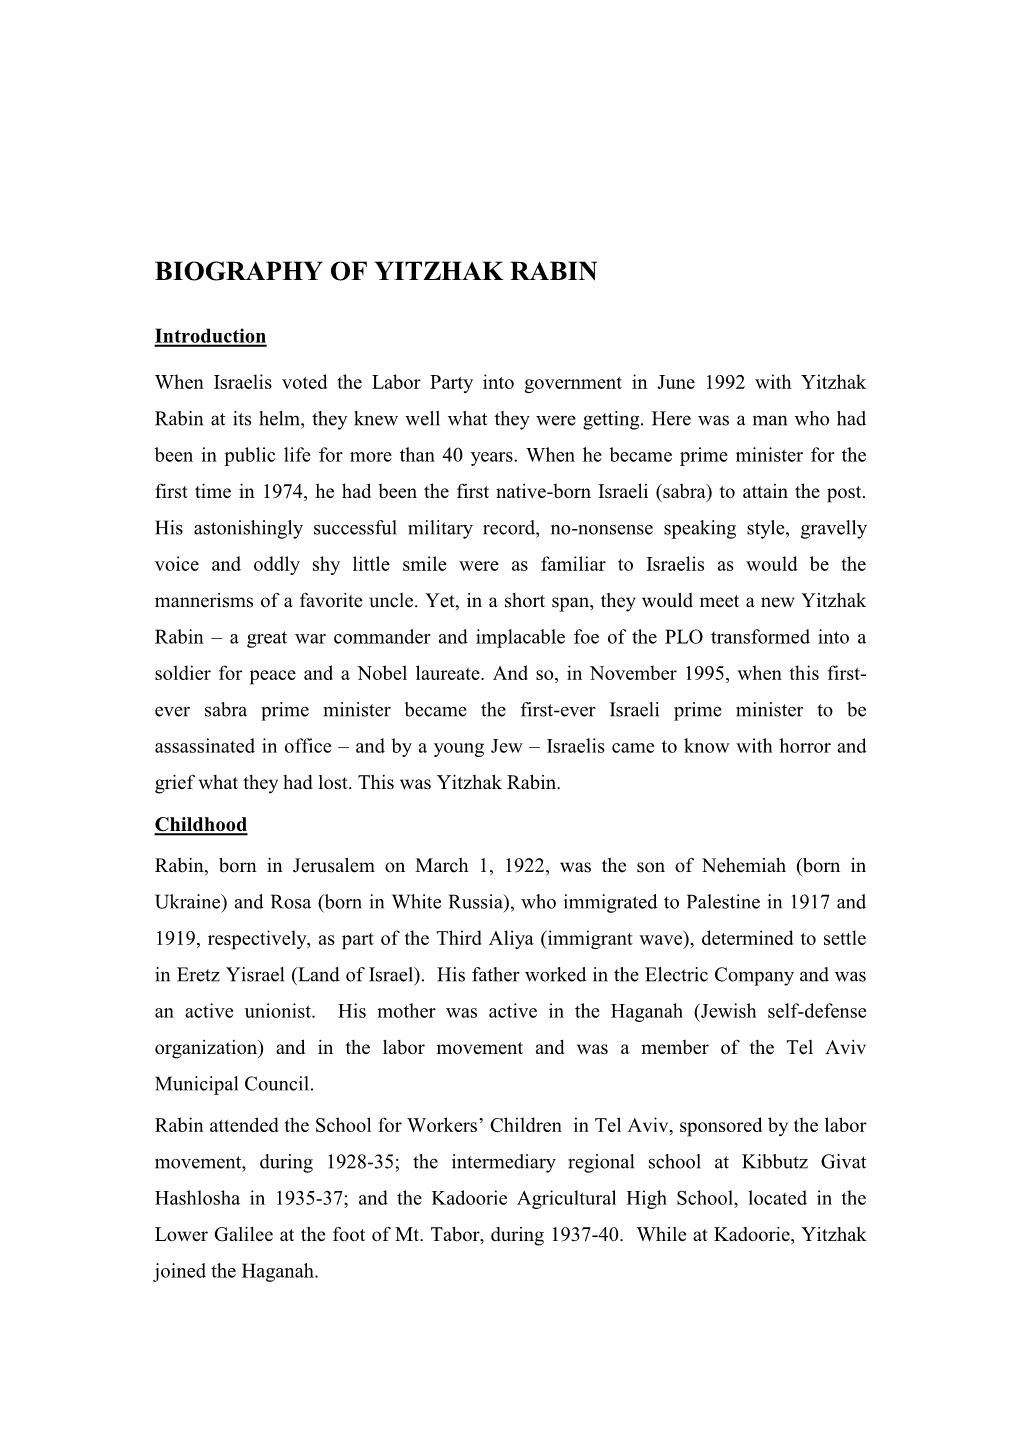 Biography of Yitzhak Rabin